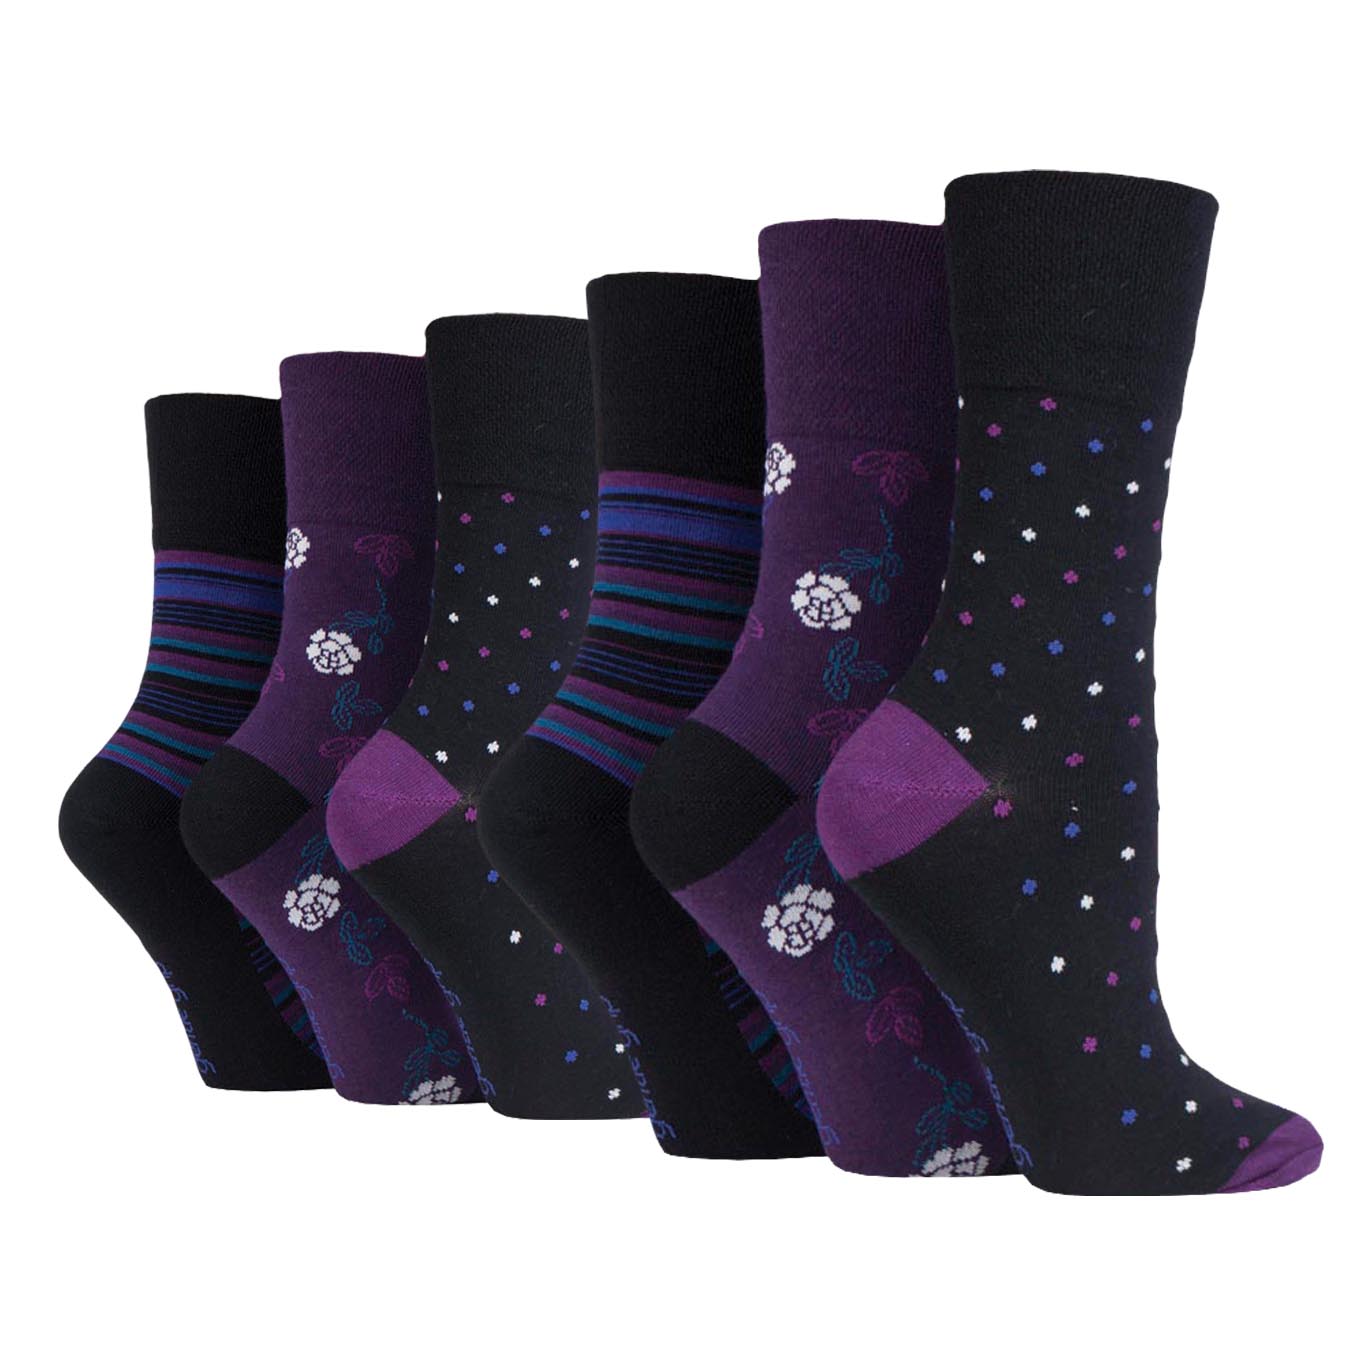 6 Pairs Ladies Gentle Grip Cotton Socks Enchantment Black/Purple